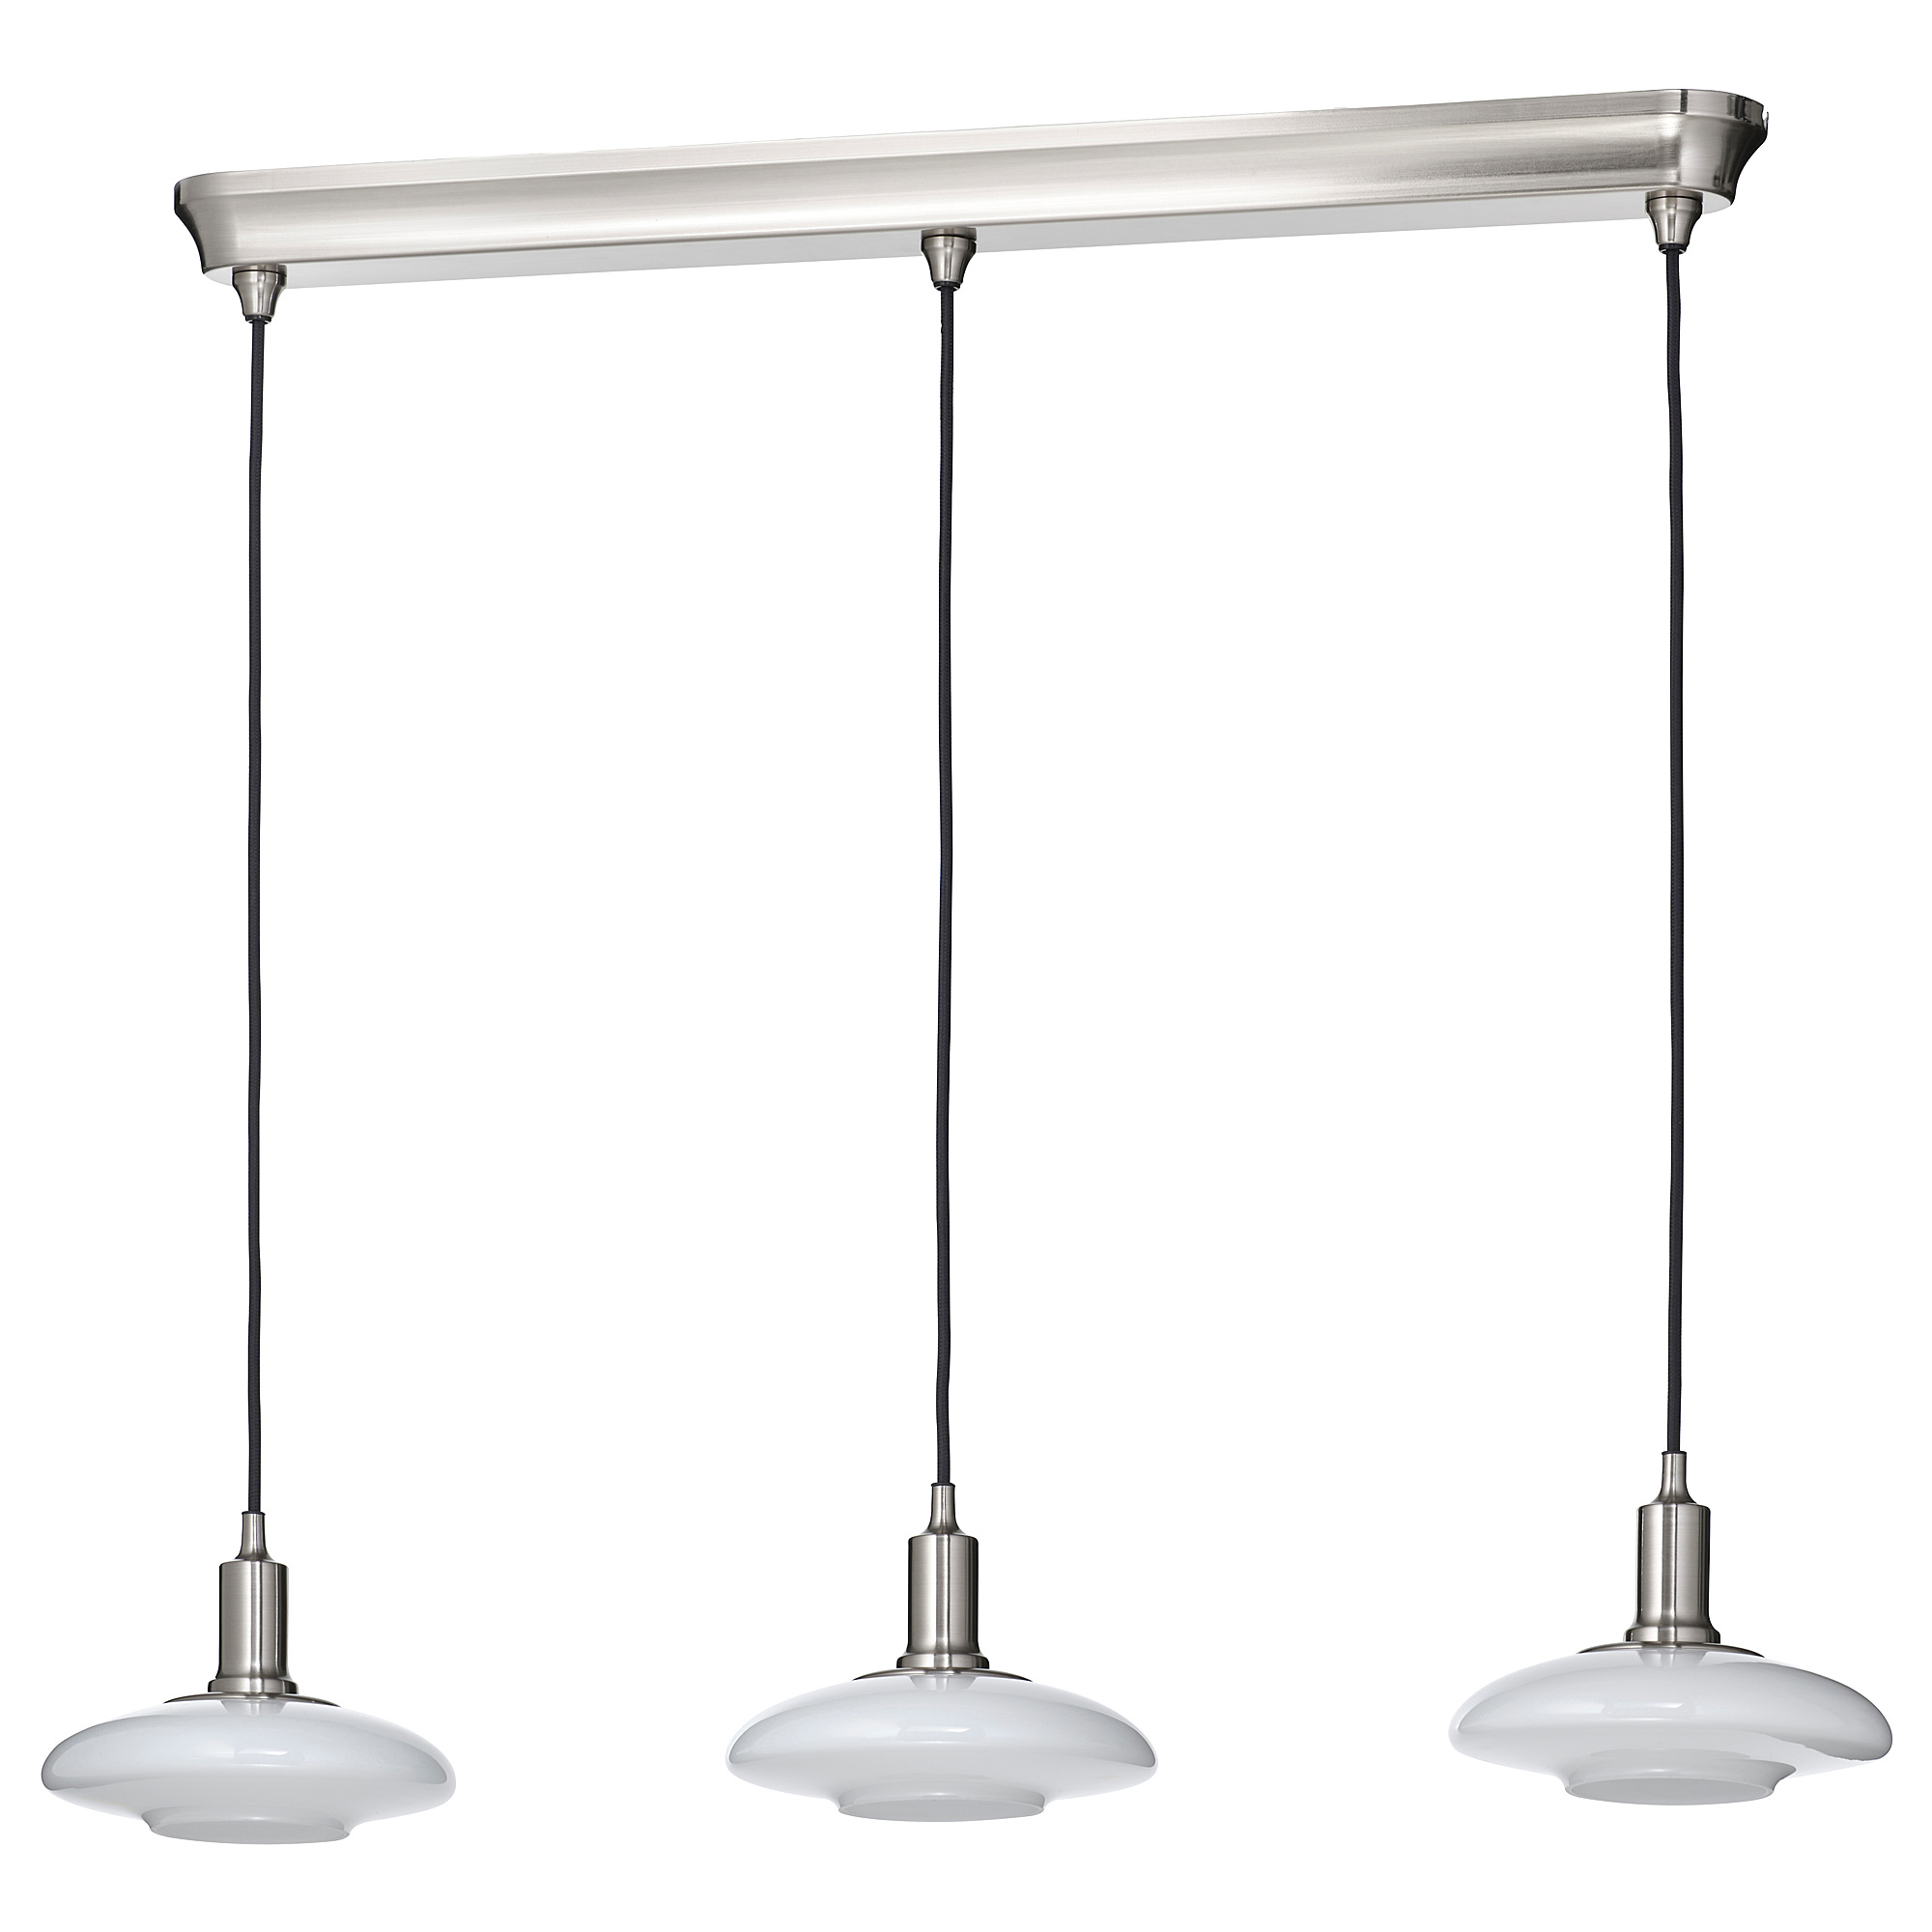 TÄLLBYN pendant lamp with 3 lamps